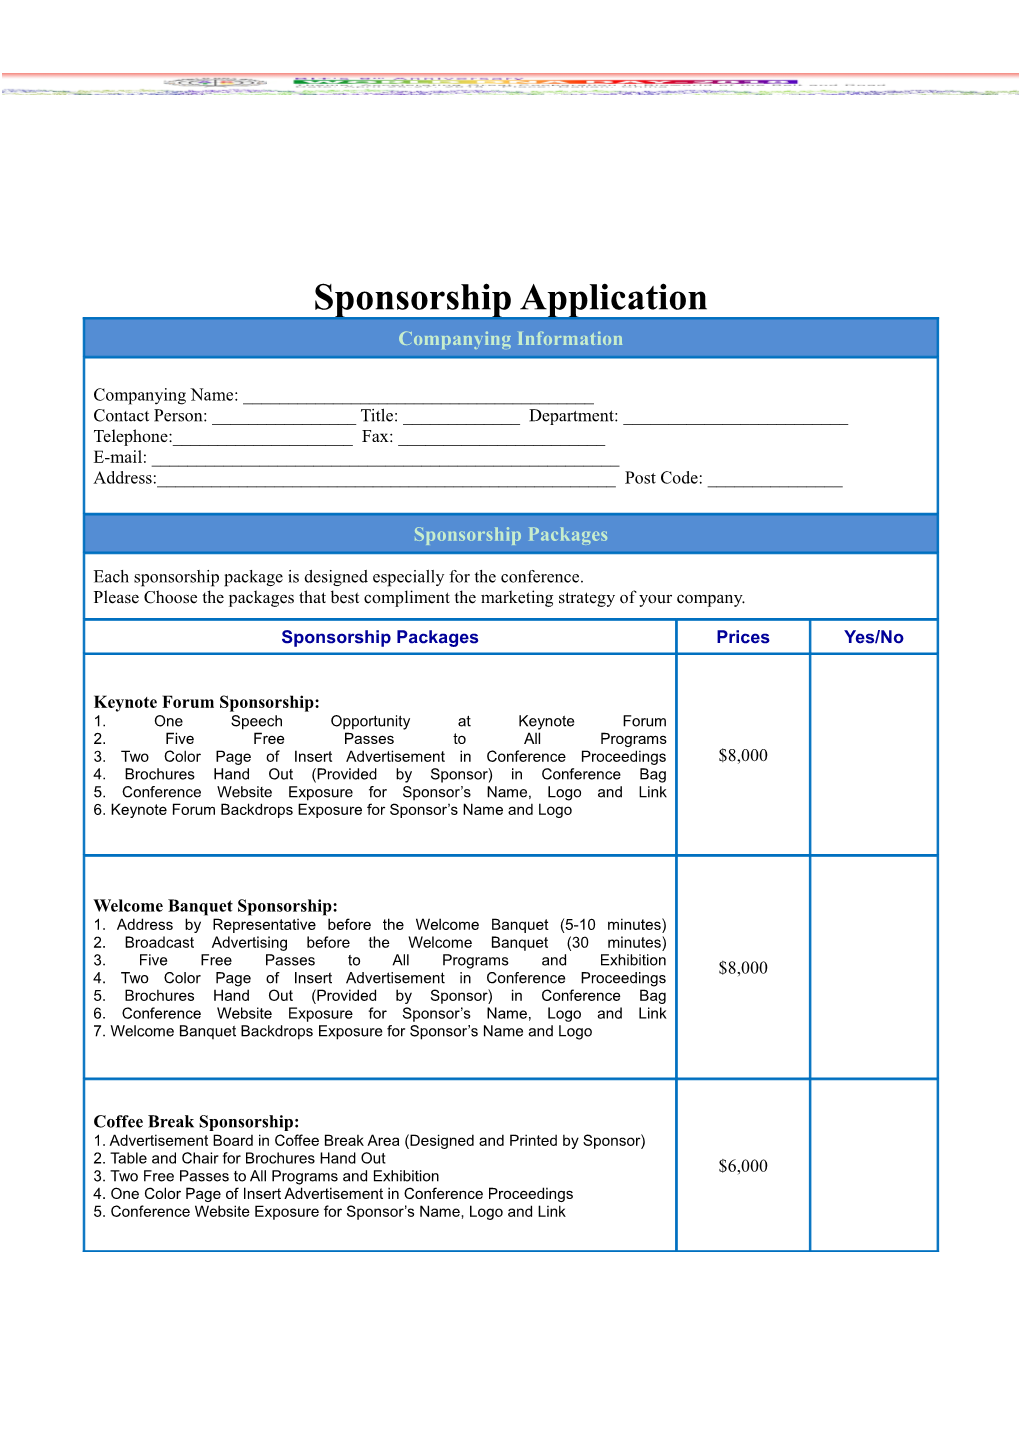 Sponsorship Application